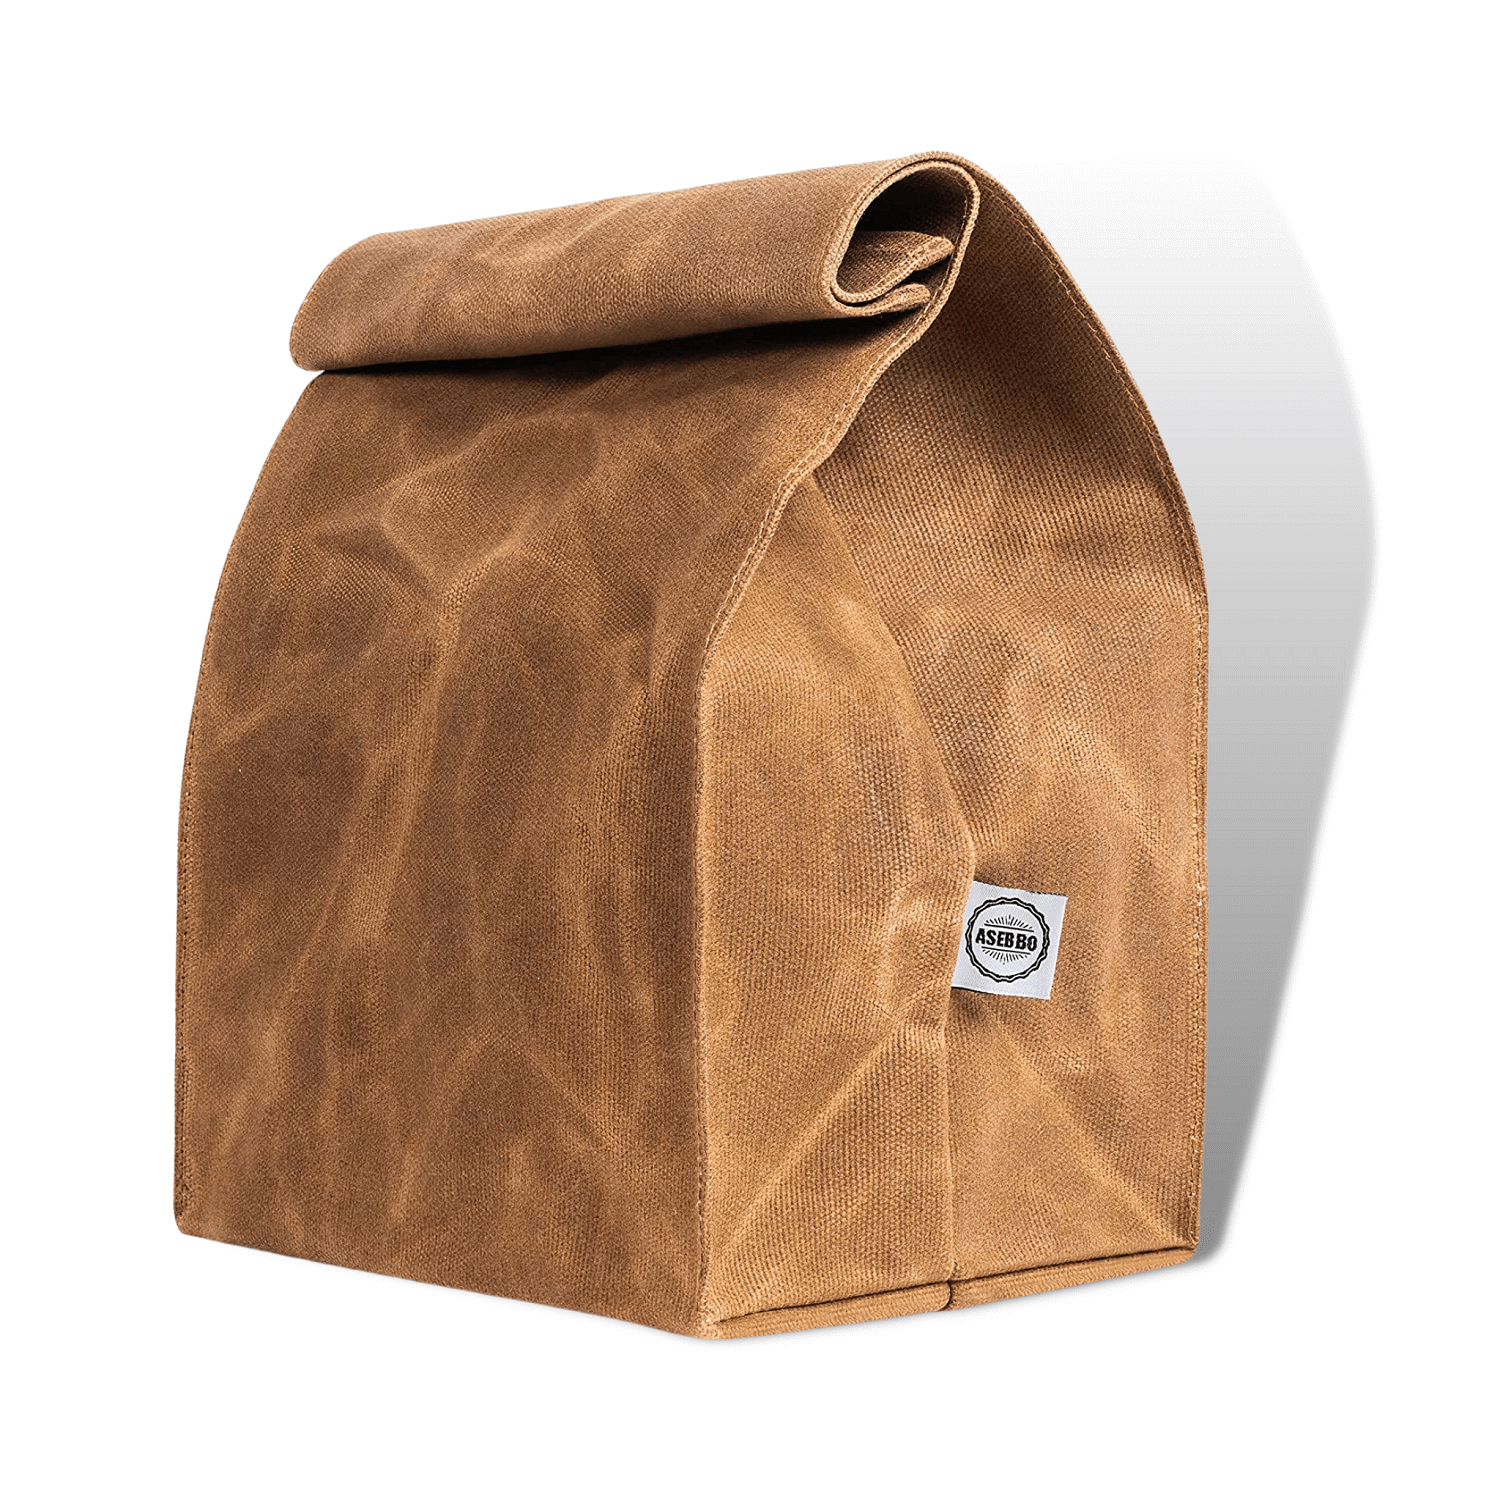 Printed Lunch Box Bag